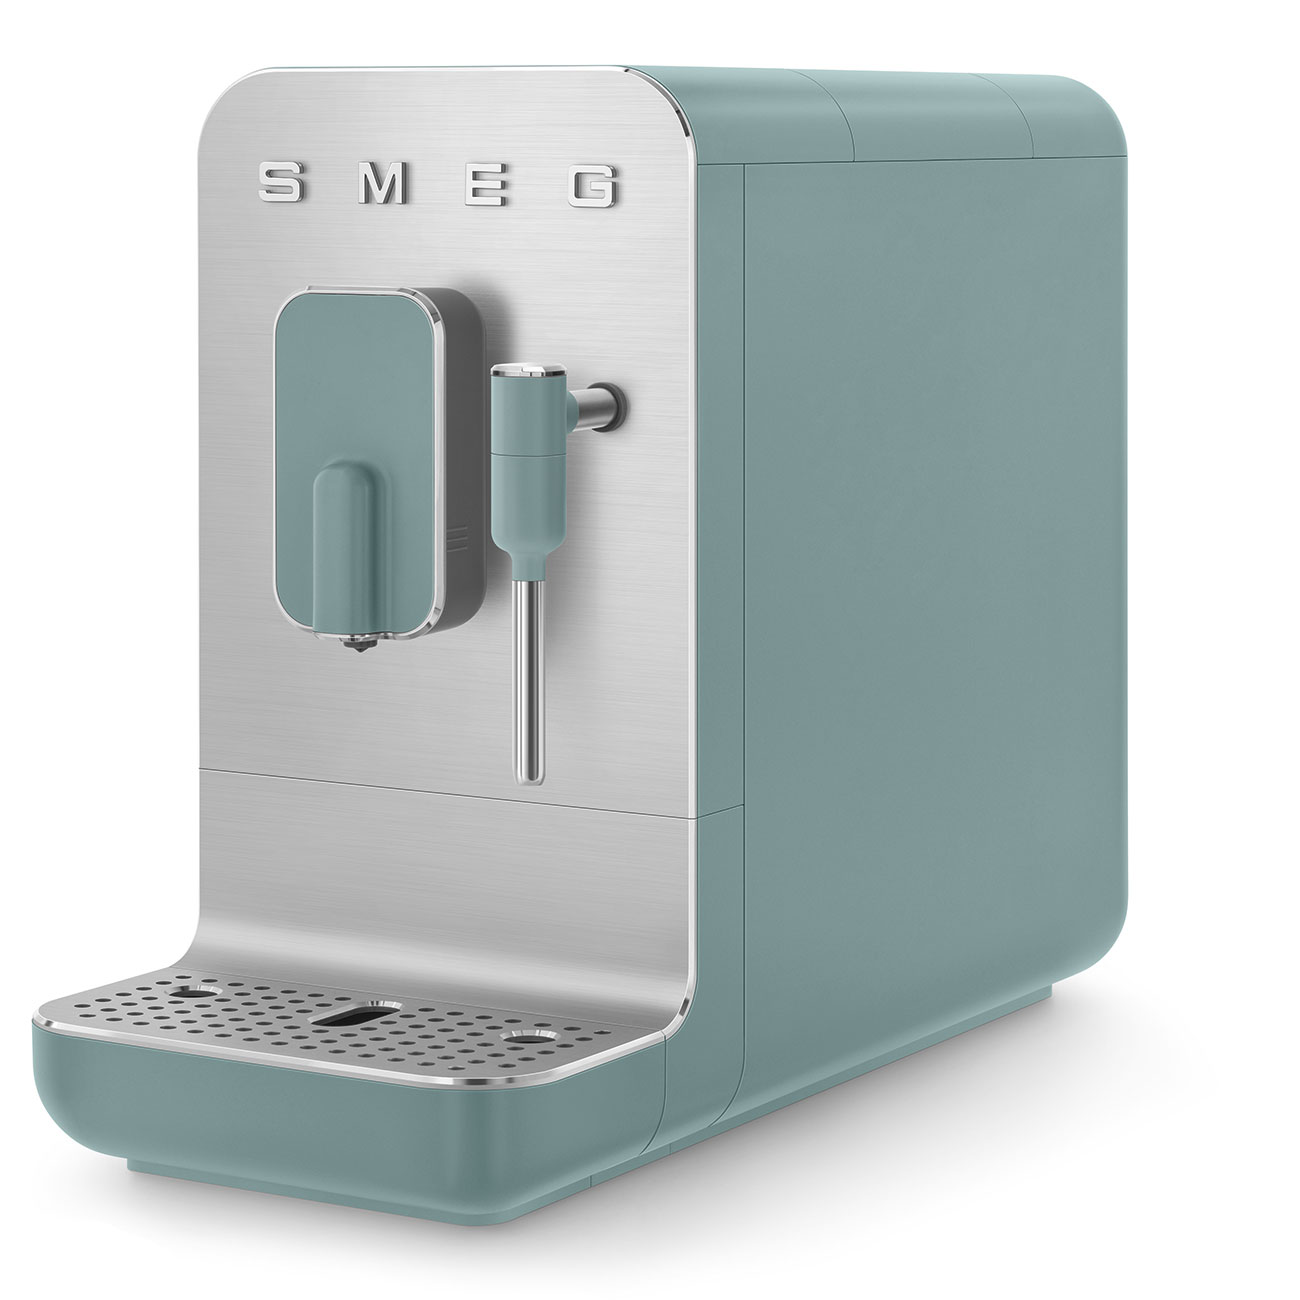 Smeg Emerald Green Espresso Manual Coffee Machine with Milk Forther - BCC02EGMUK_7